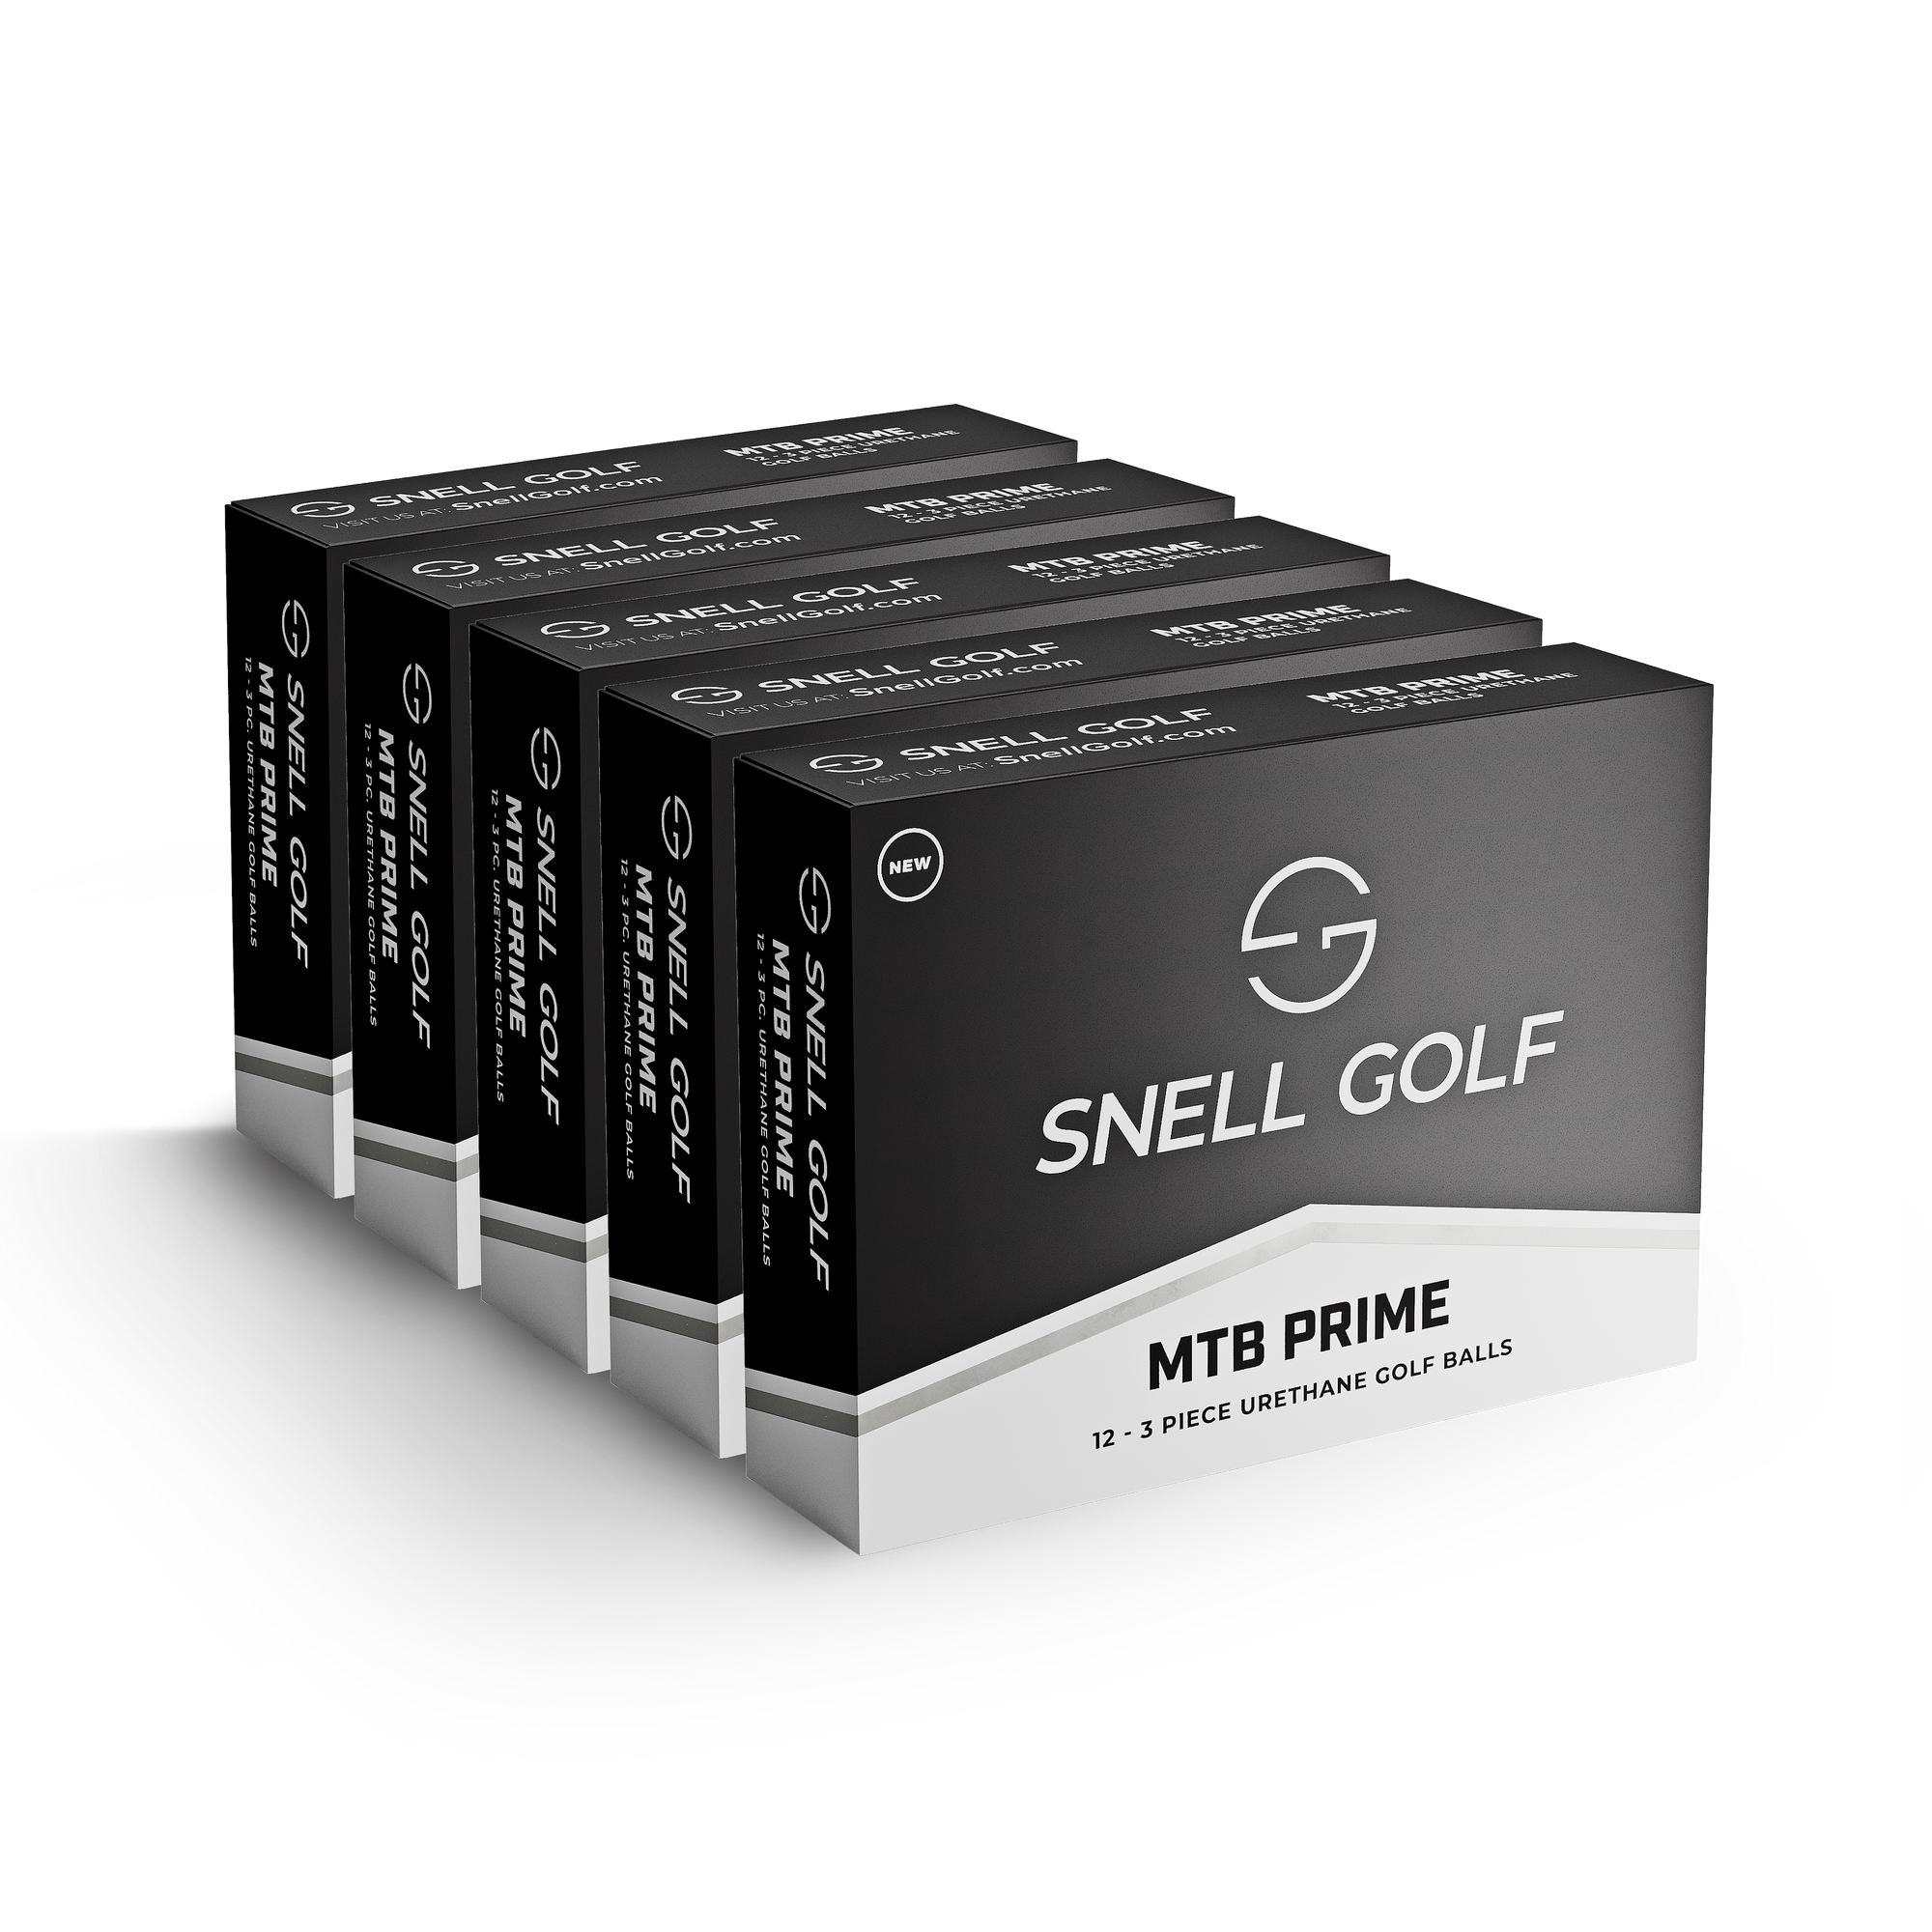 2023 MTB PRIME Value Pack (5 dz.) Golf Ball Snell Golf   